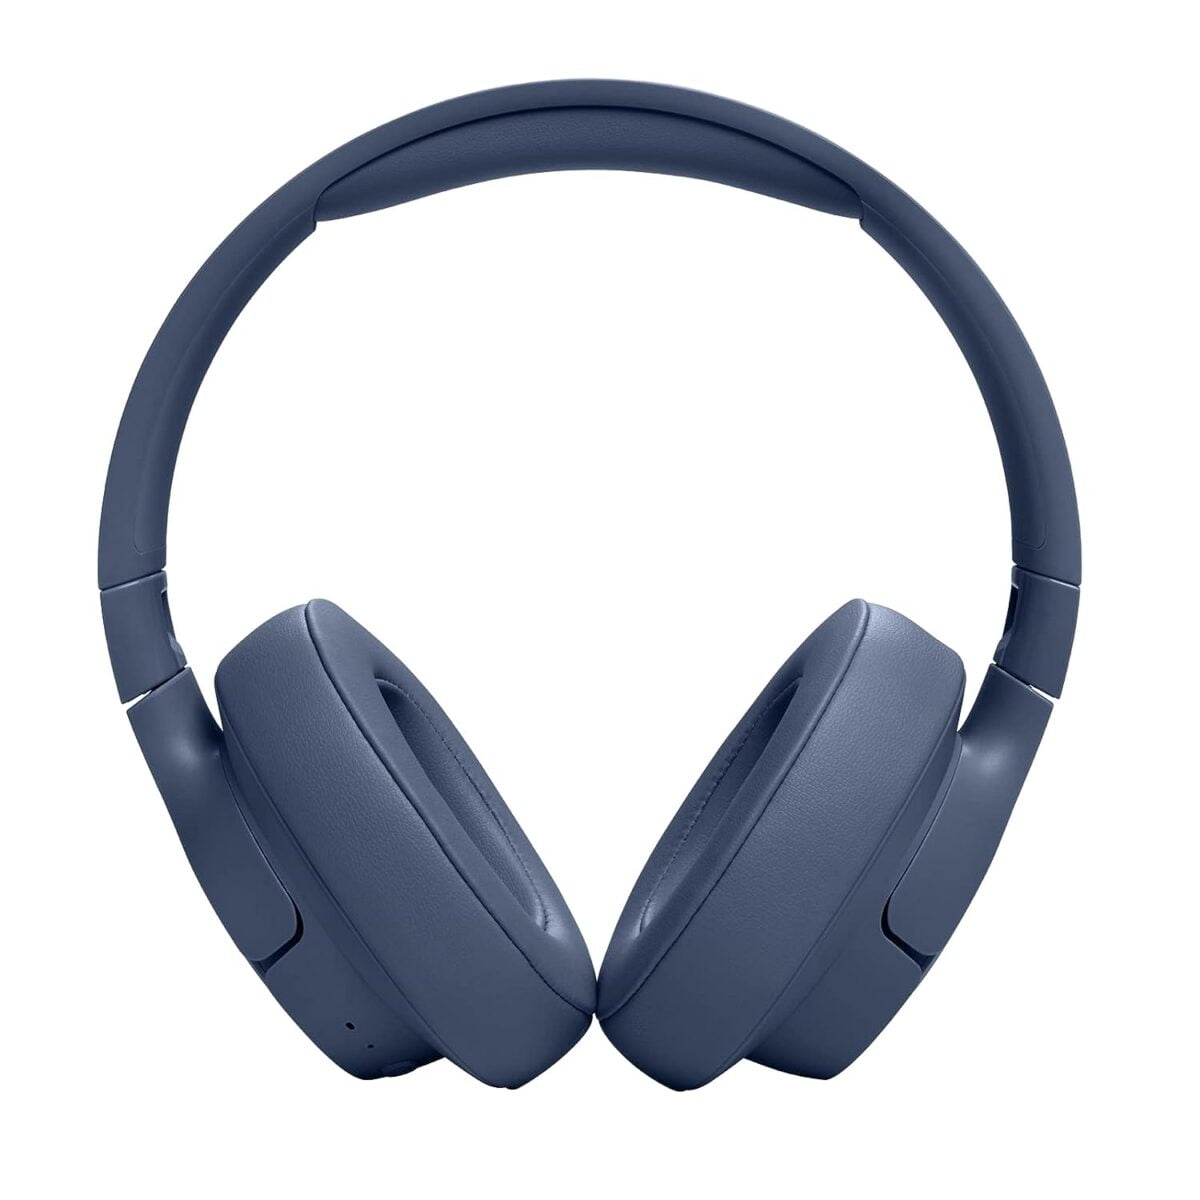 Jbl tune 720bt wireless over ear headphones blue 4 jbl tune 720bt